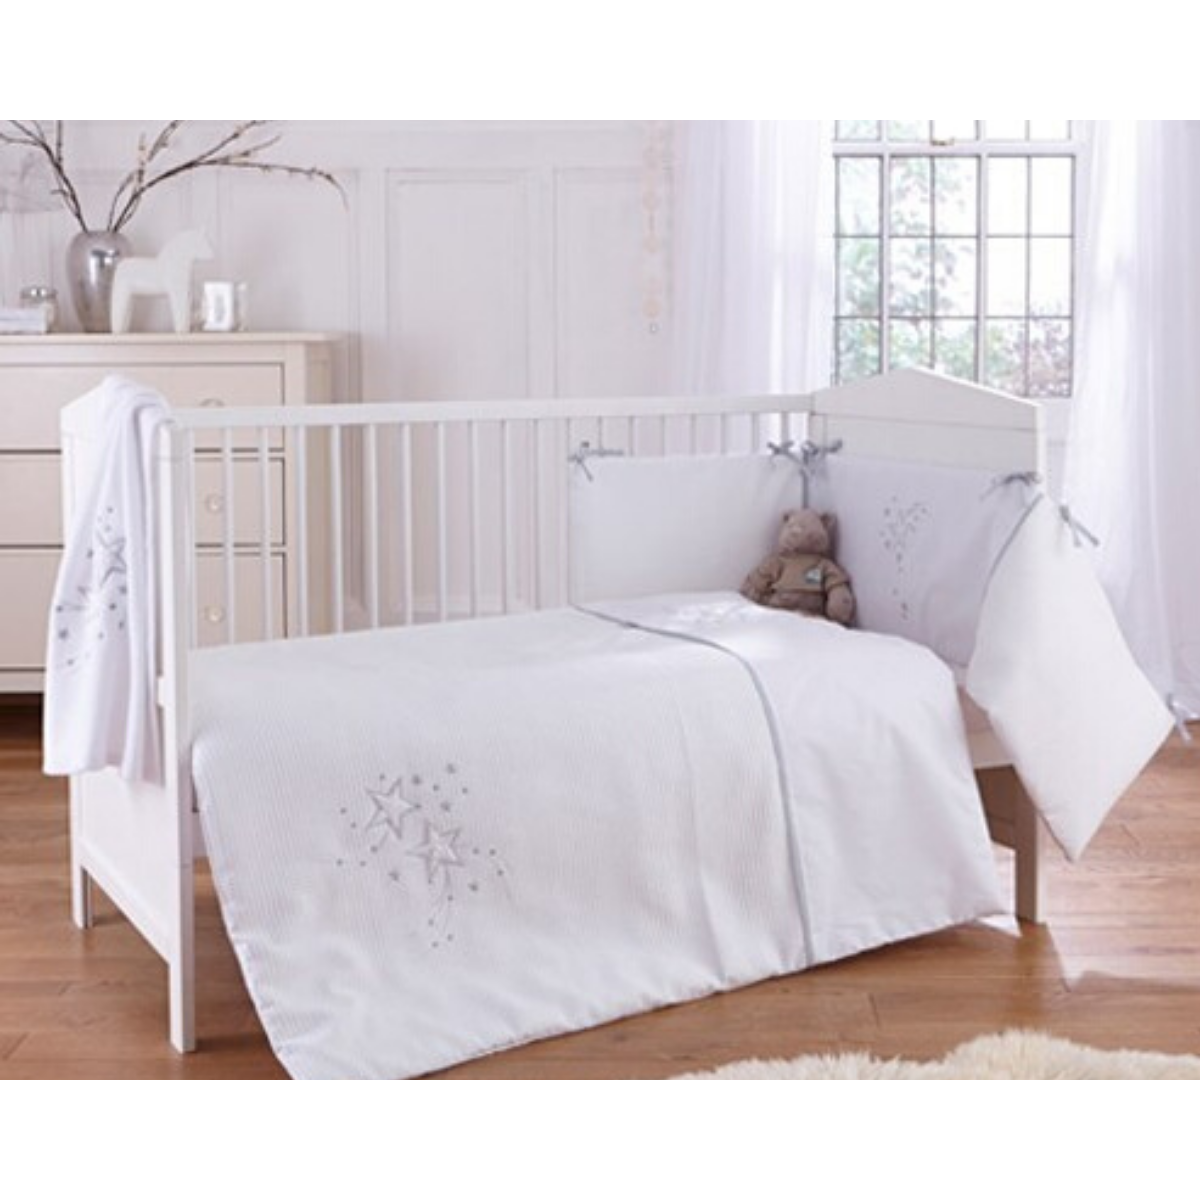 cot bed bedspread